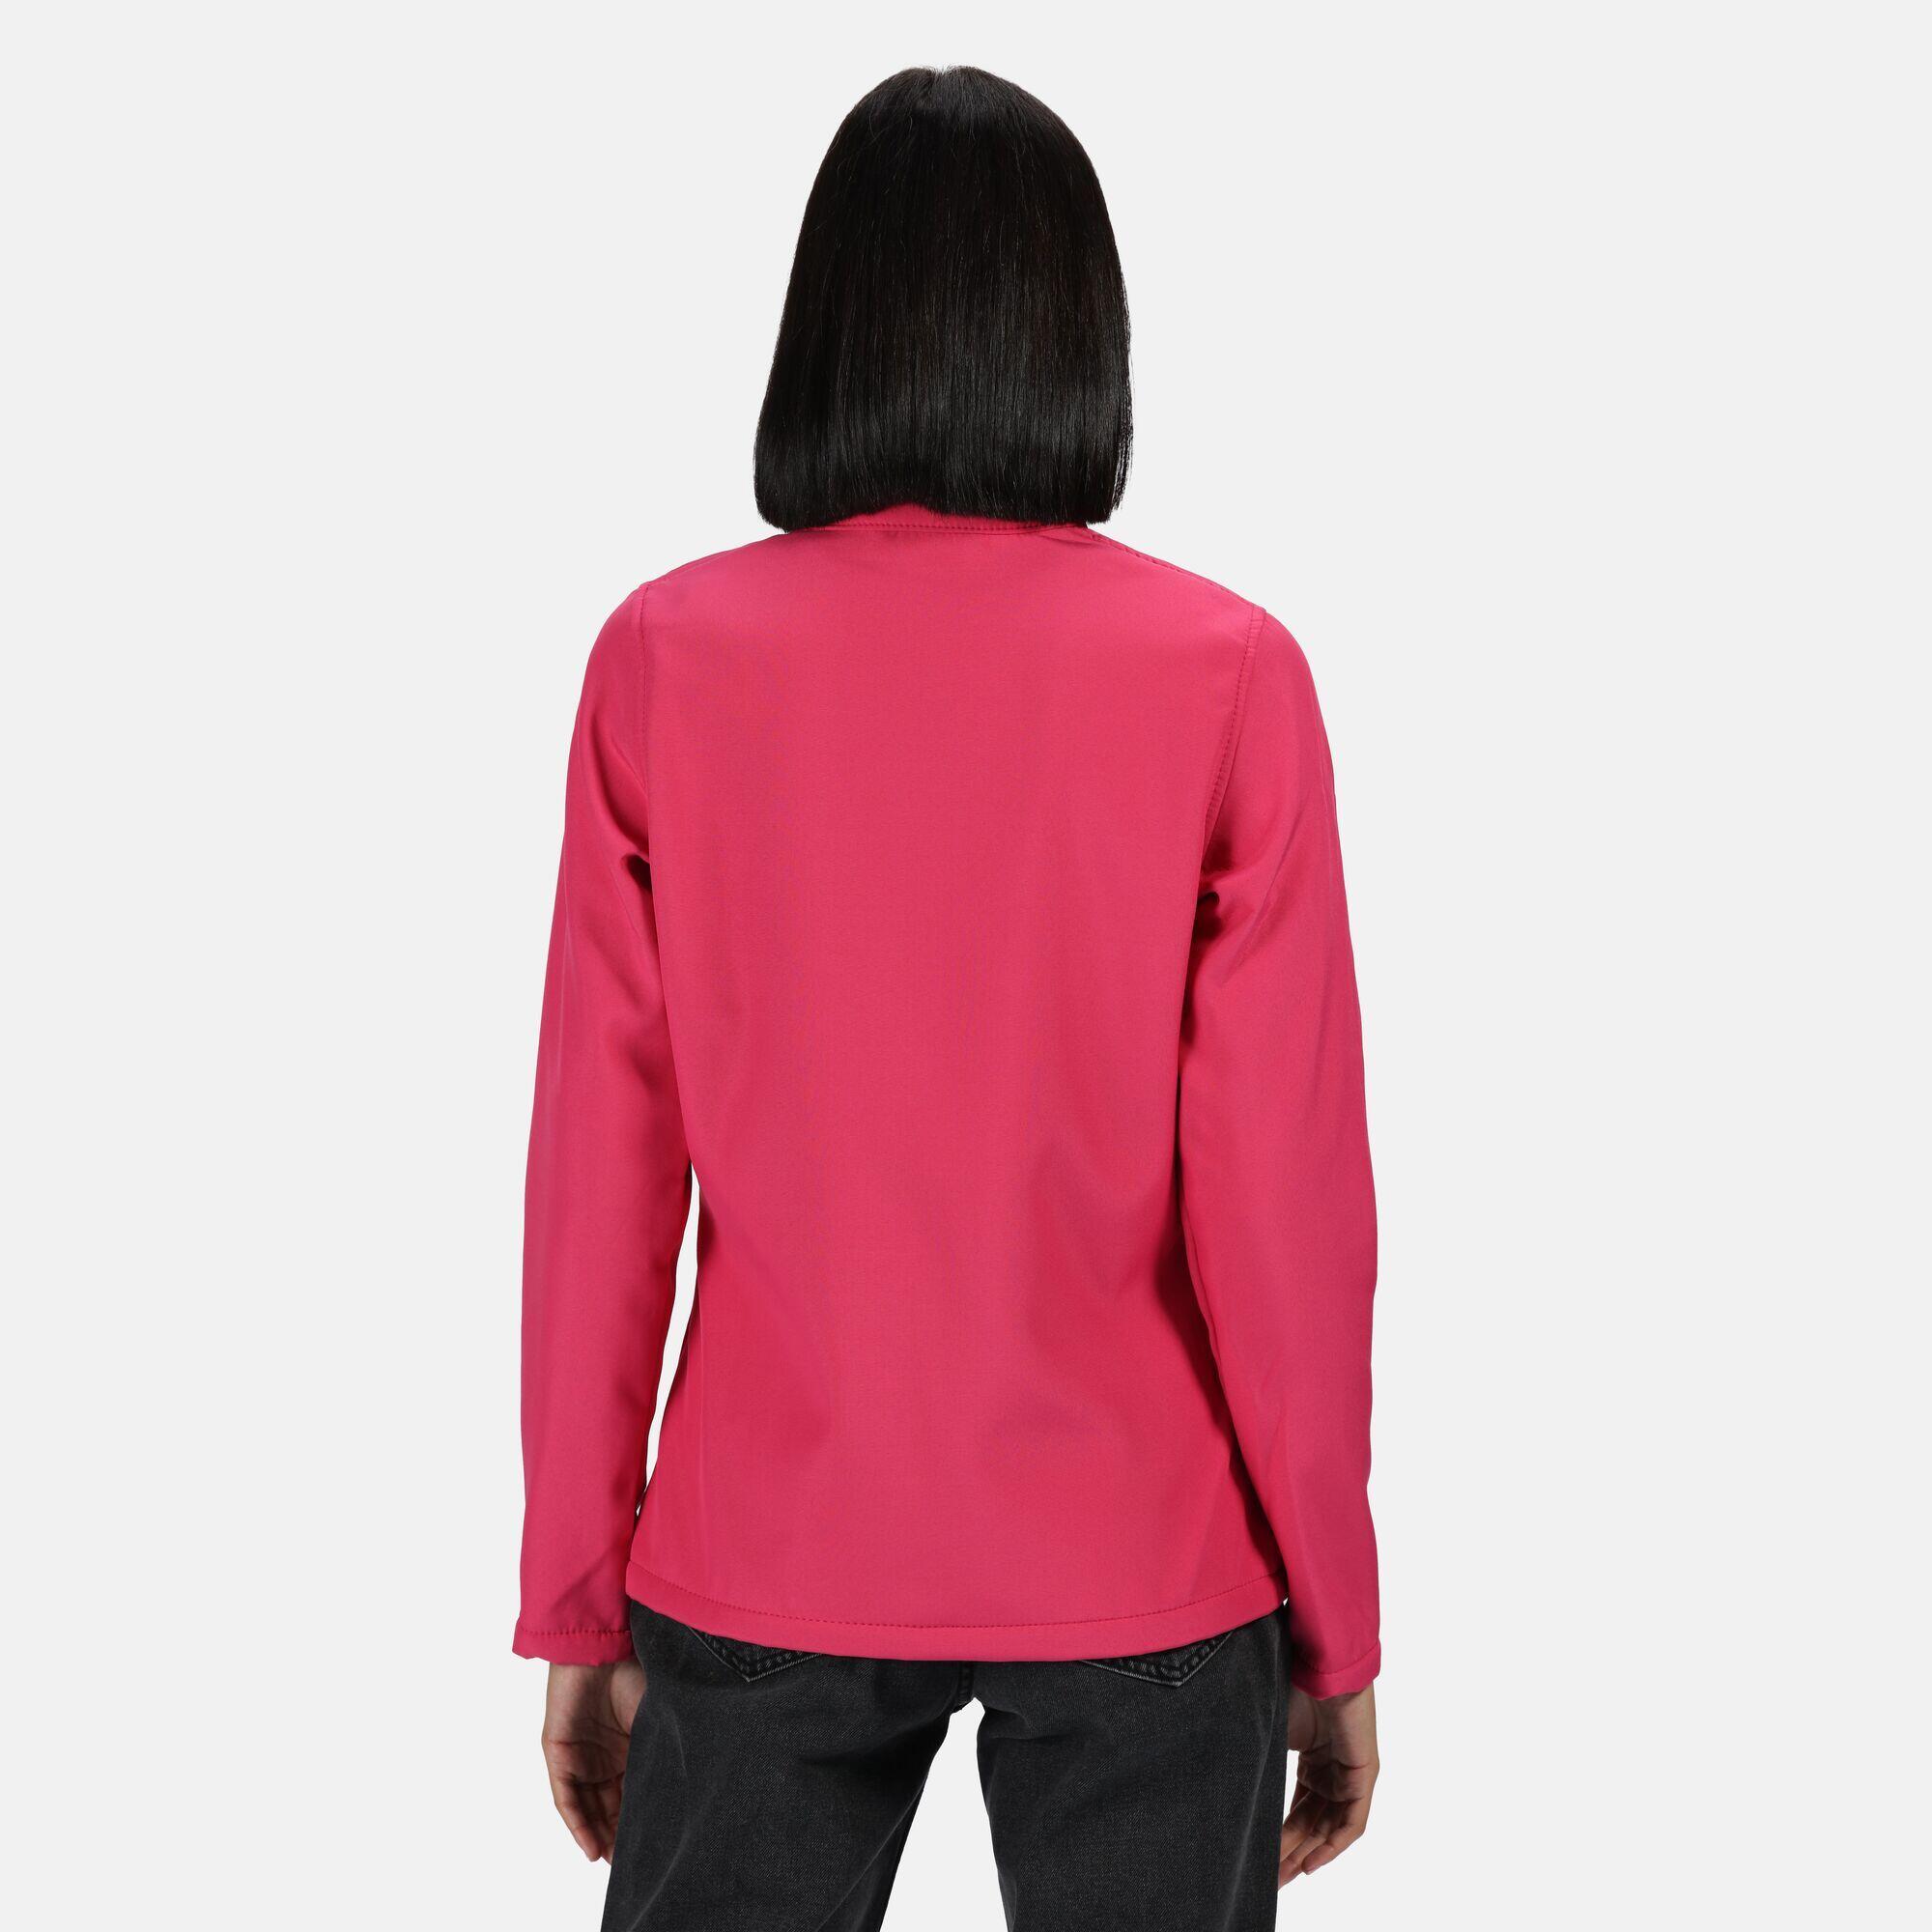 Standout Womens/Ladies Ablaze Printable Soft Shell Jacket (Hot Pink/Black) 2/5